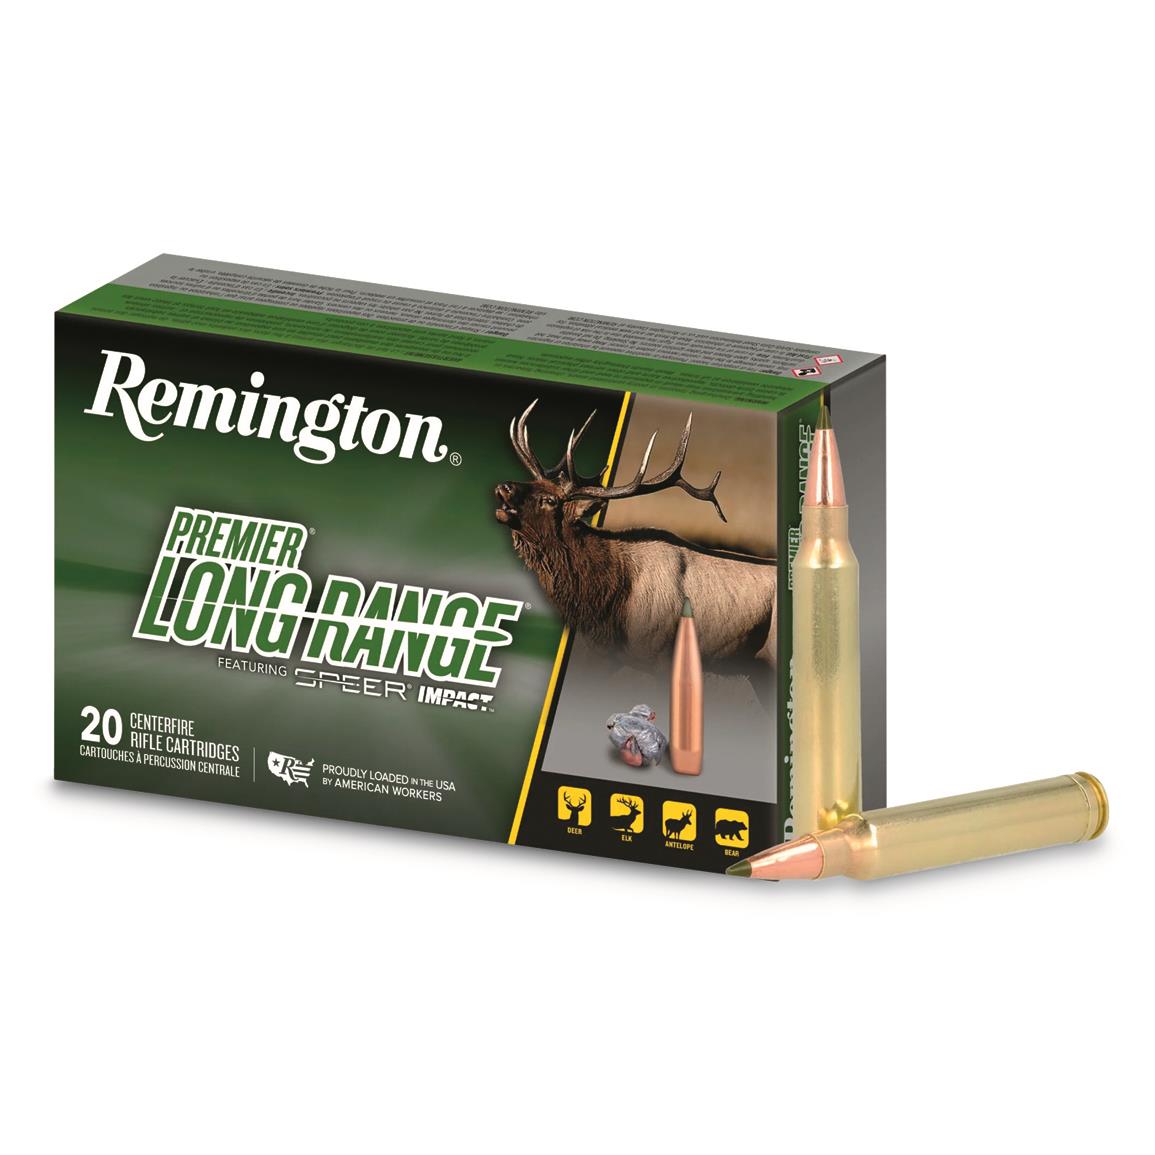 Remington Premier Long Range, .300 Win. Mag., Speer Impact, 190 Grain, 20 Rounds